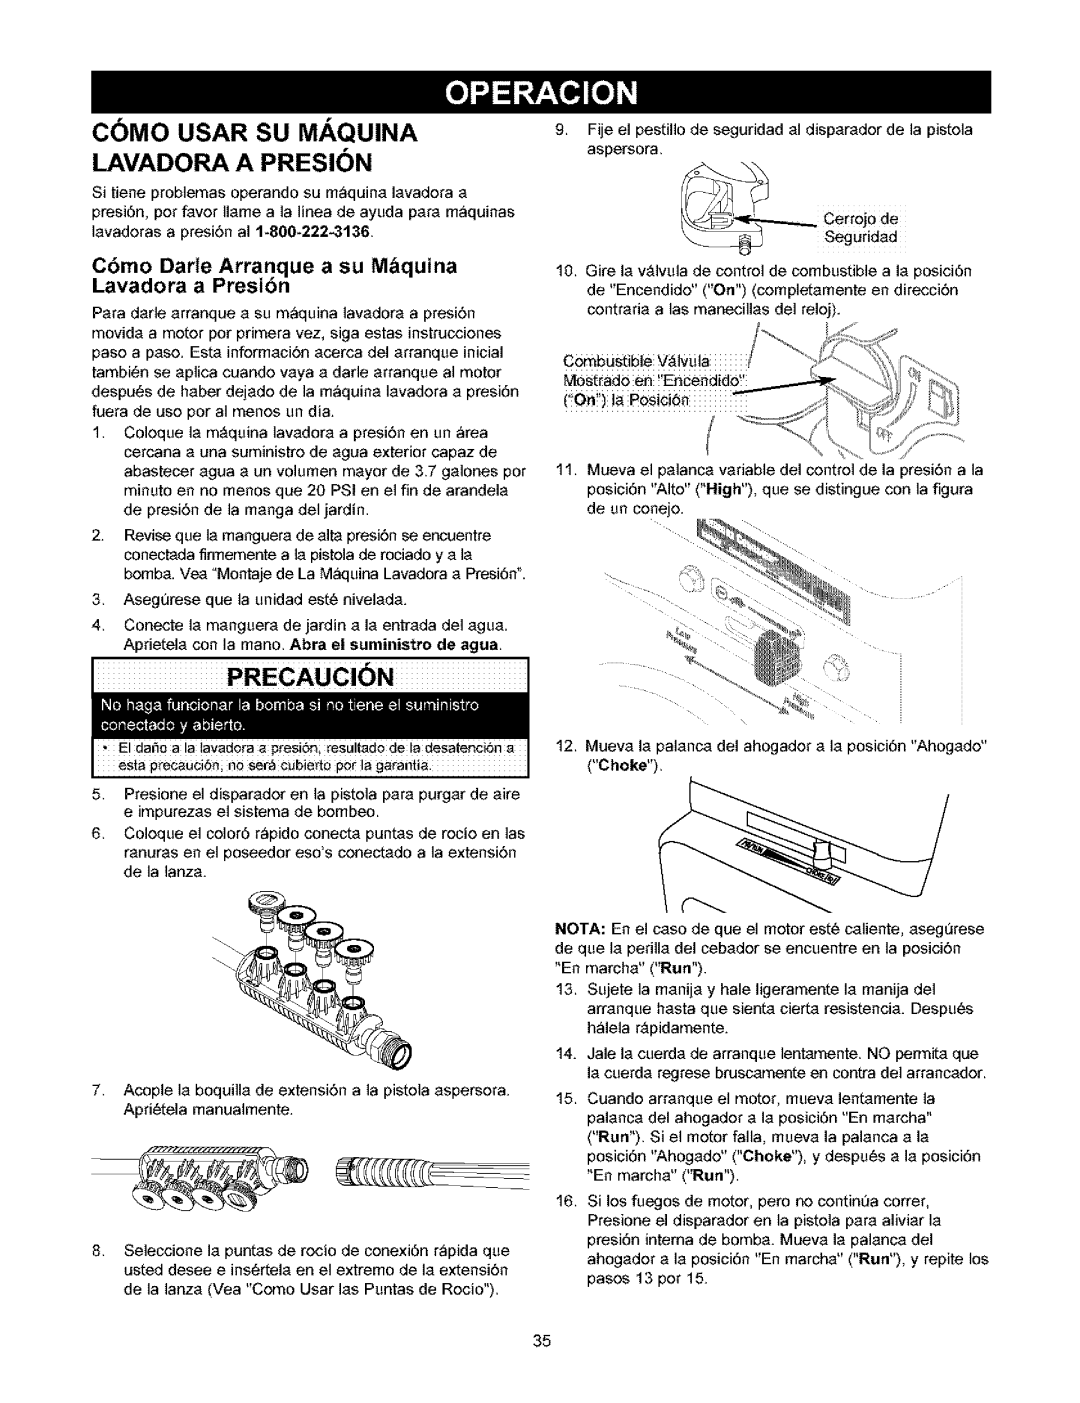 Craftsman 580.753 manual Como Usar Su Maquina Lavadora A Presion, Precaucion, Cbmo Darte Arranque a su M quina 